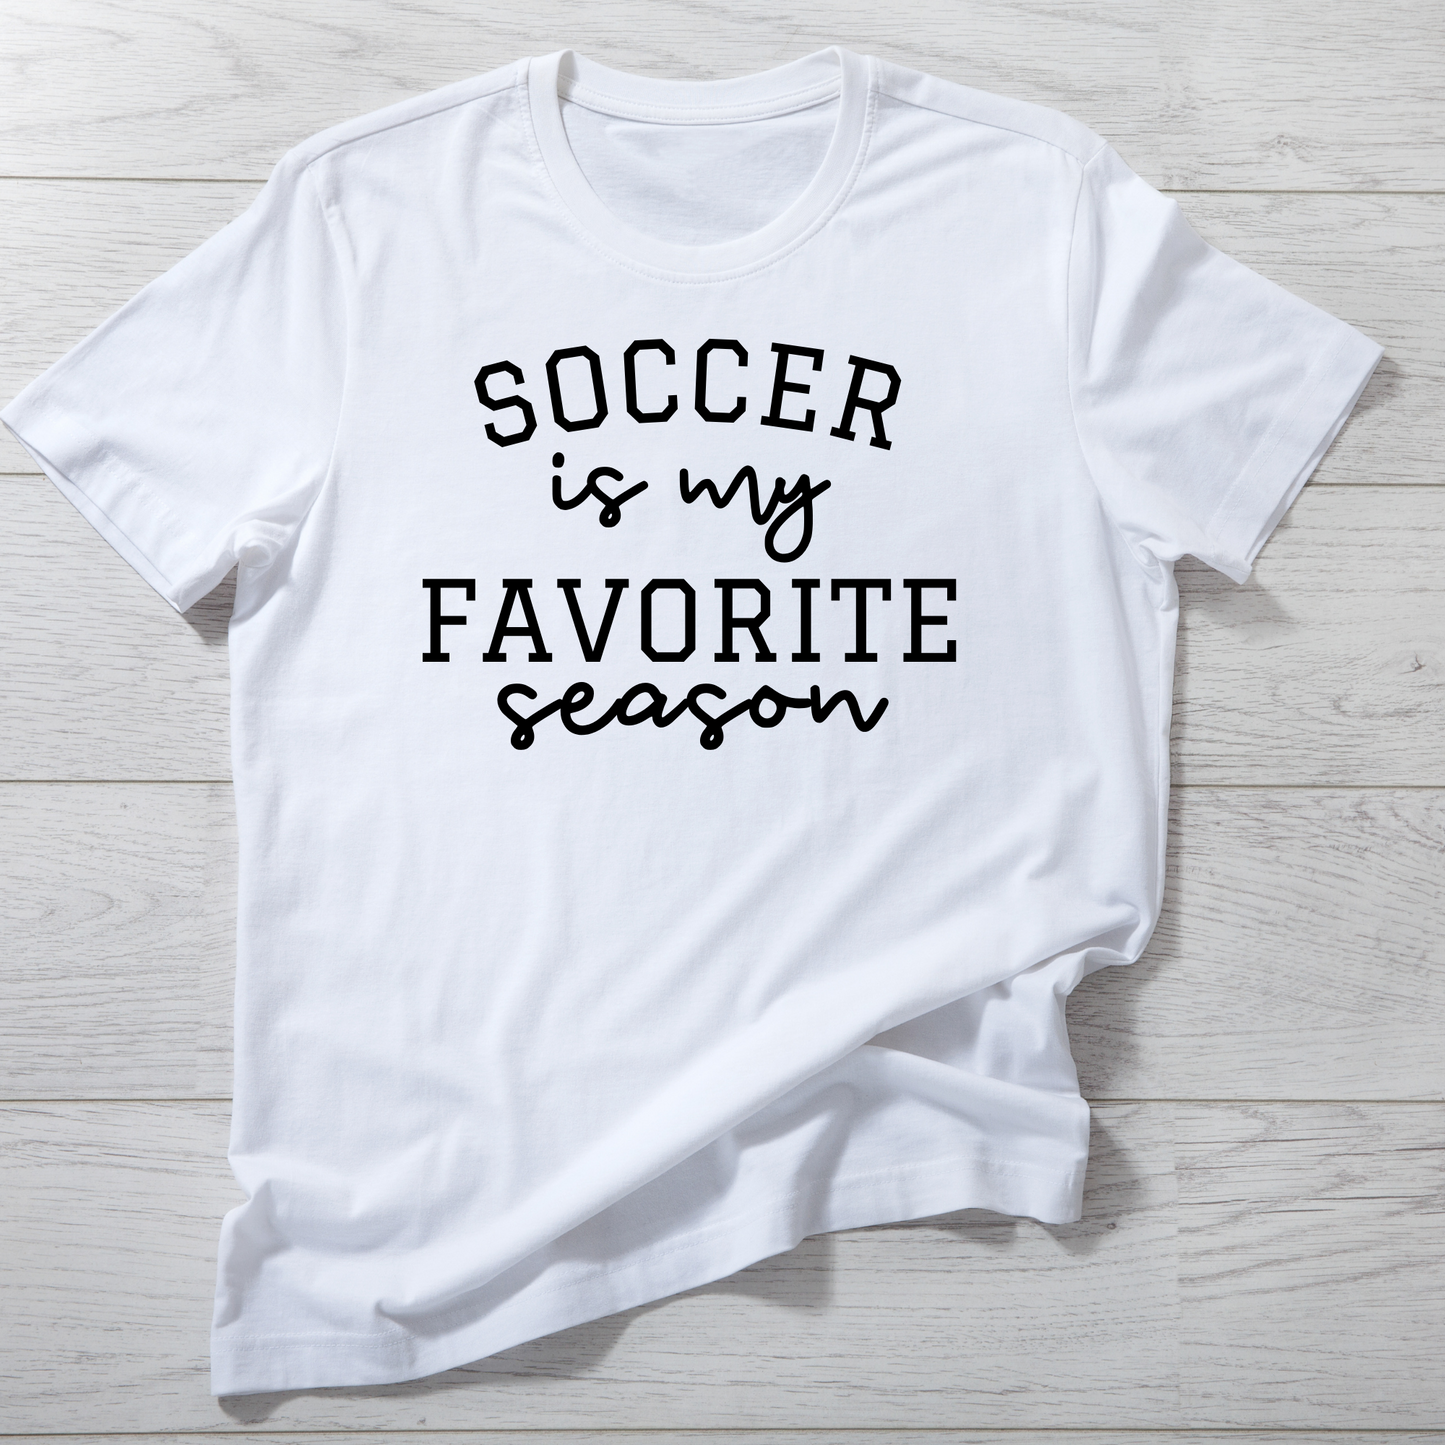 Favorite Season T-Shirt (Soccer)